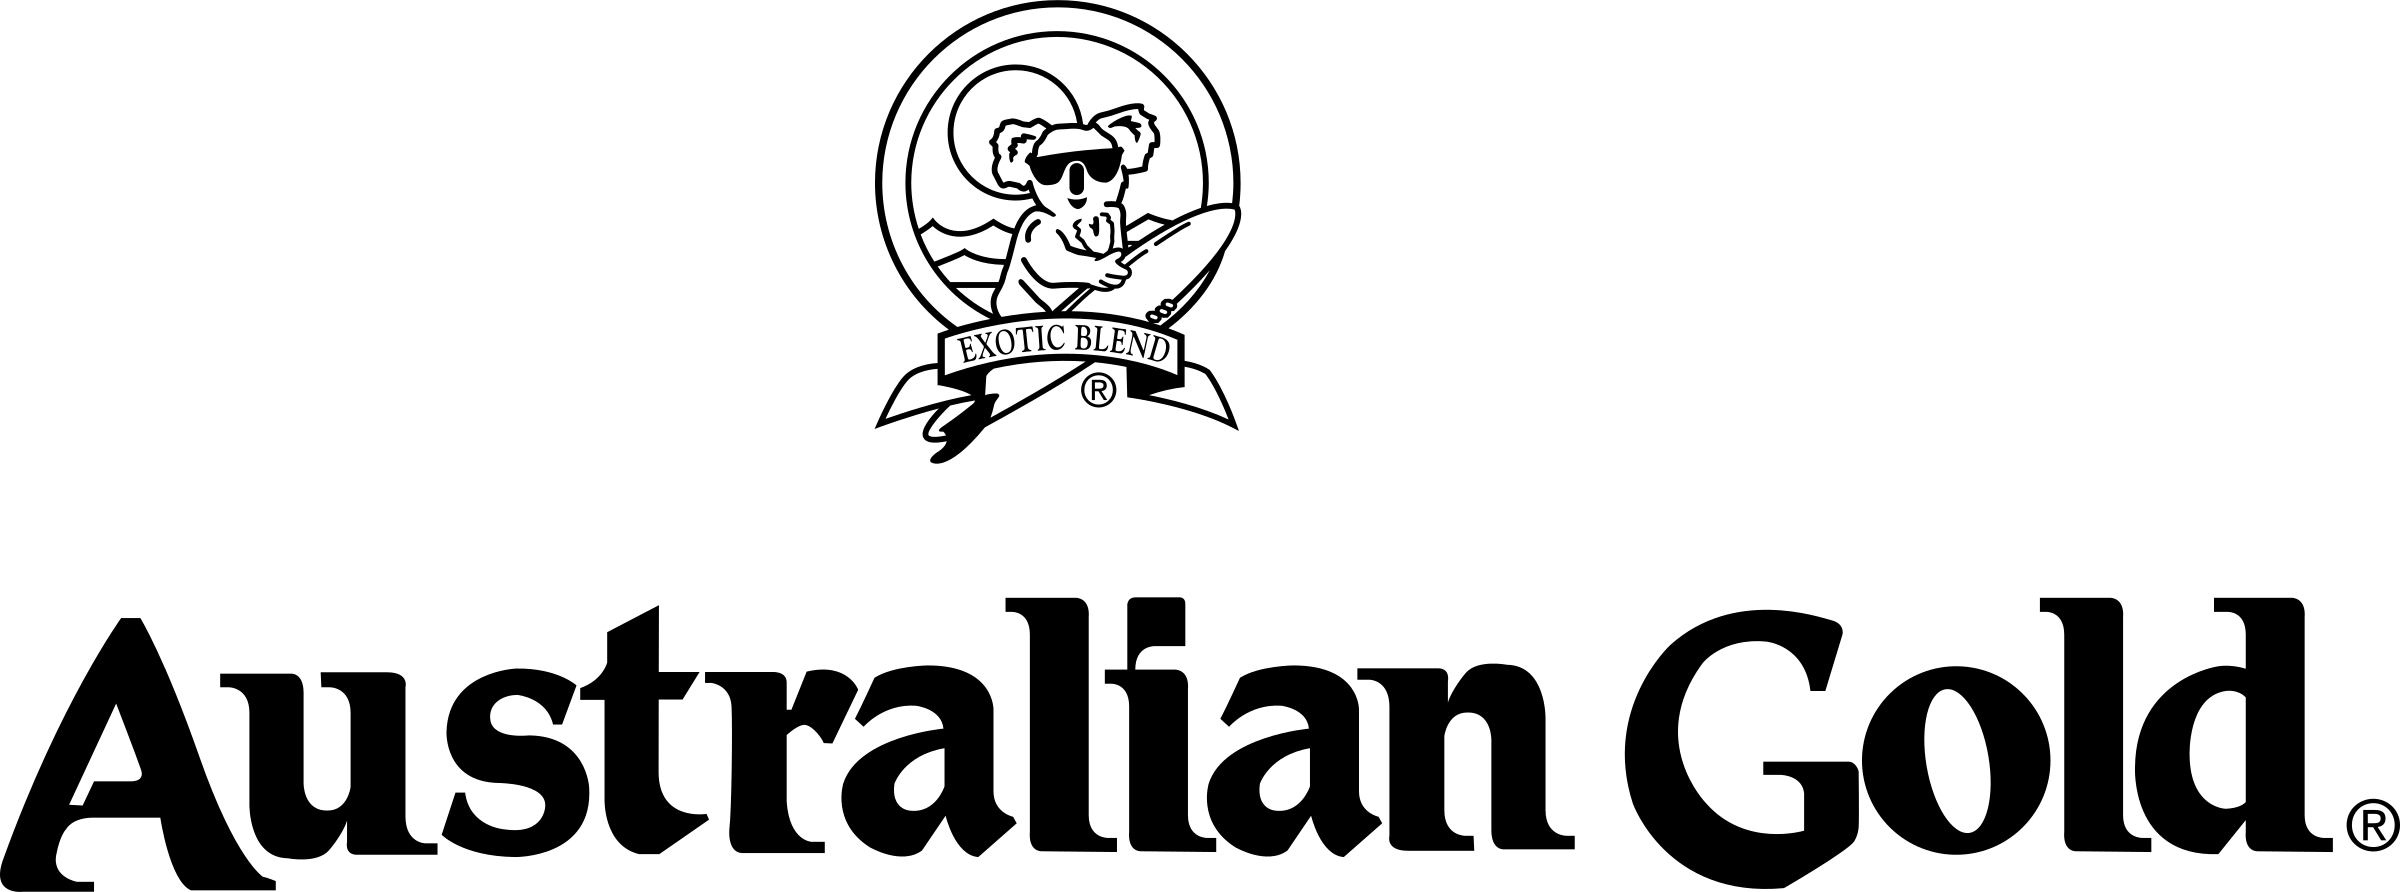 Australian Gold Logo - Australian Gold Logo PNG Transparent & SVG Vector